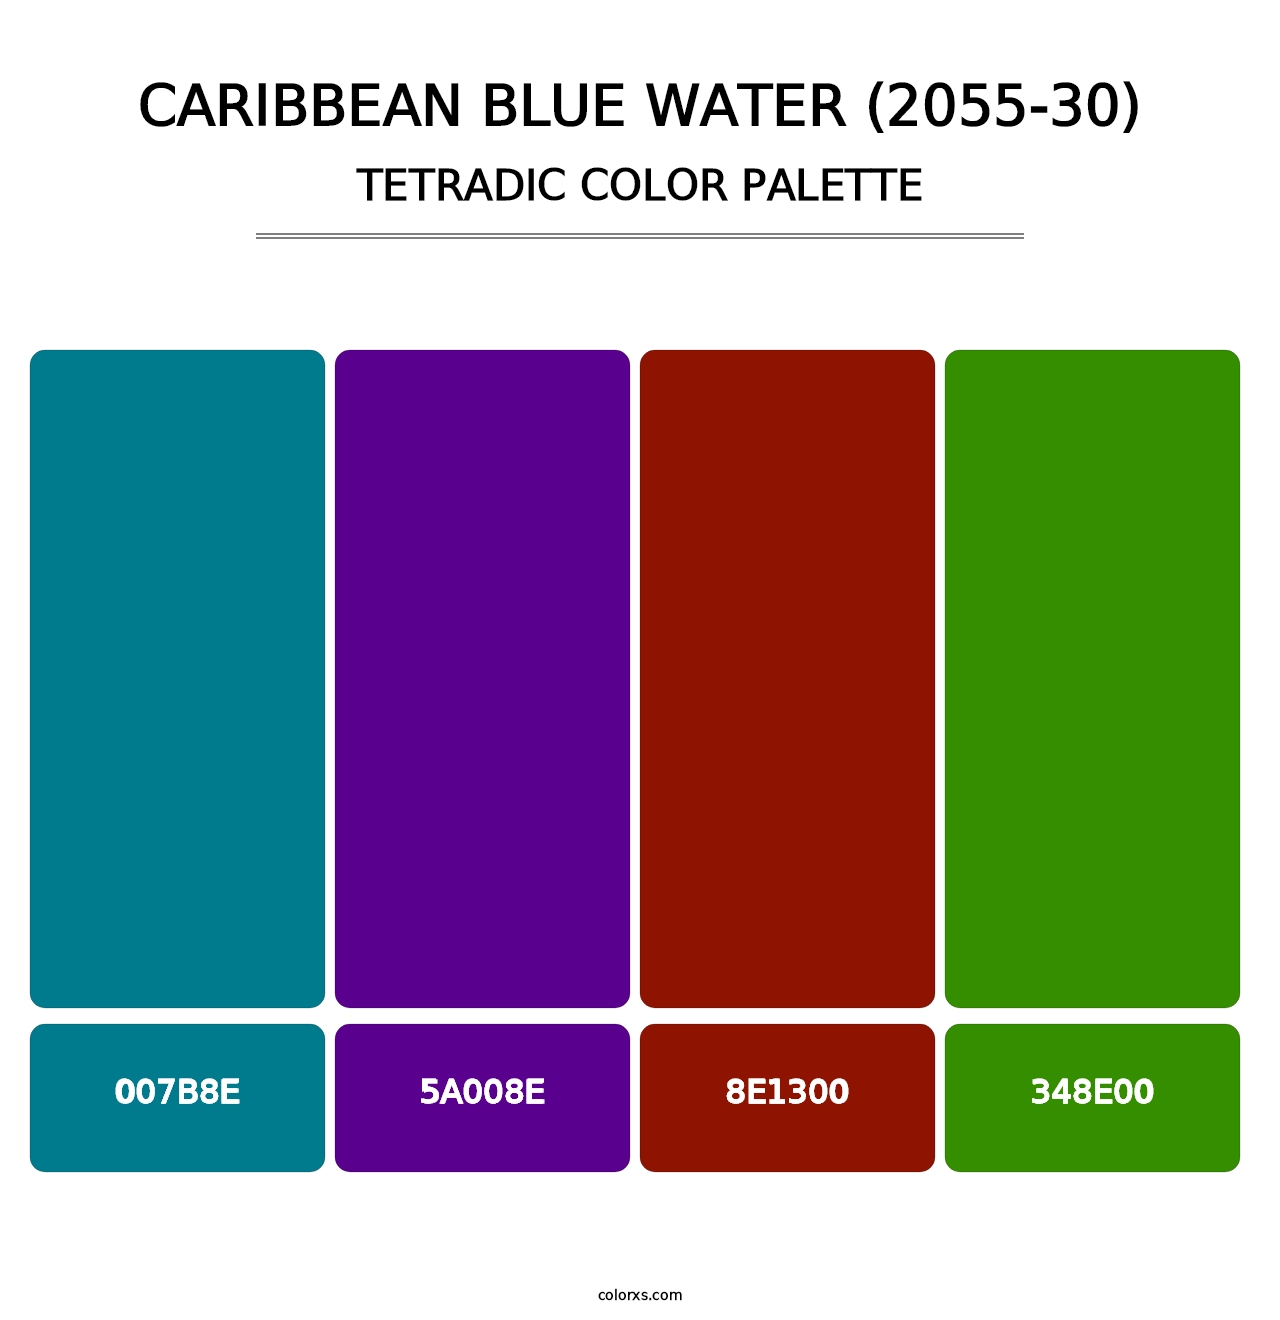 Caribbean Blue Water (2055-30) - Tetradic Color Palette